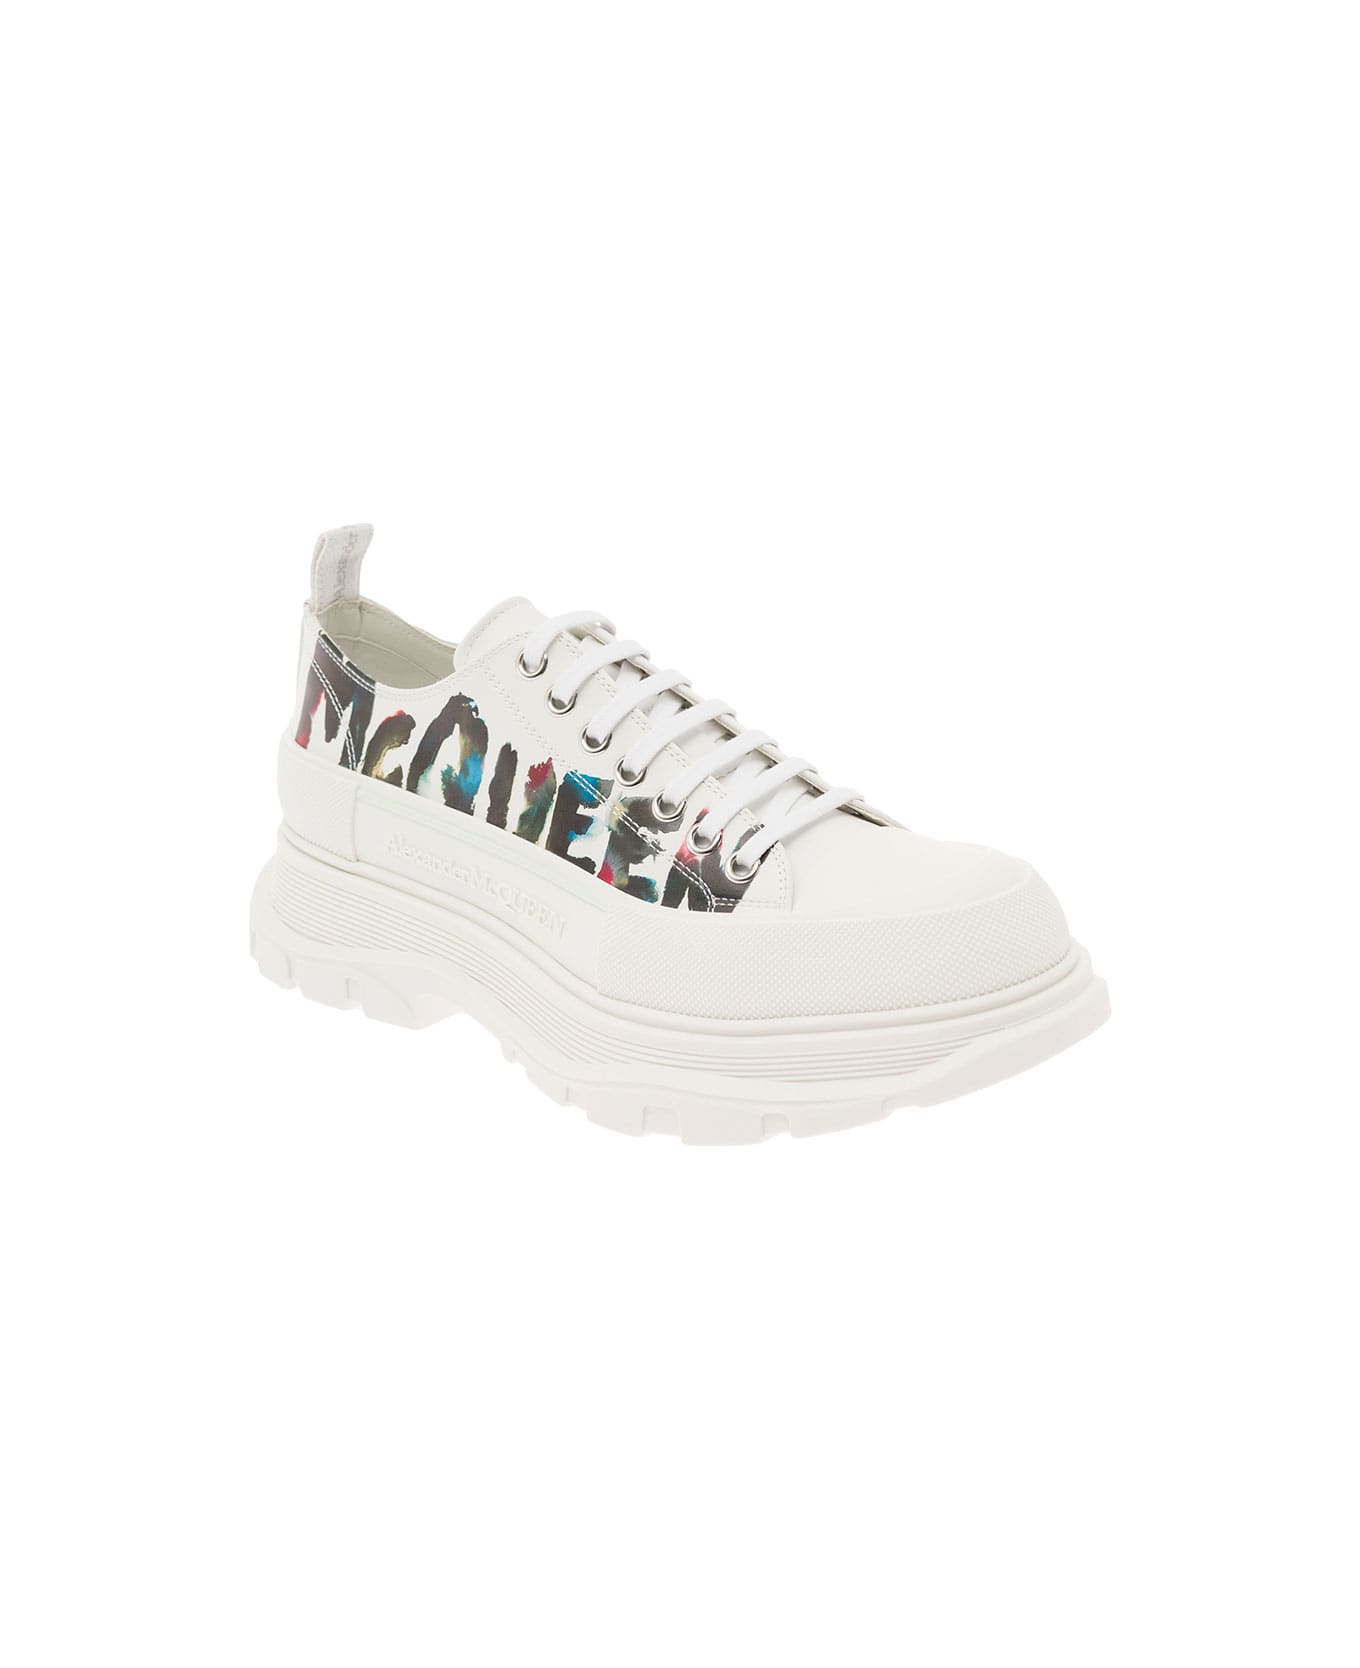 Alexander McQueen White 'tread Slick' Sneakers With Graffiti Logo Print In Calf Leather - White